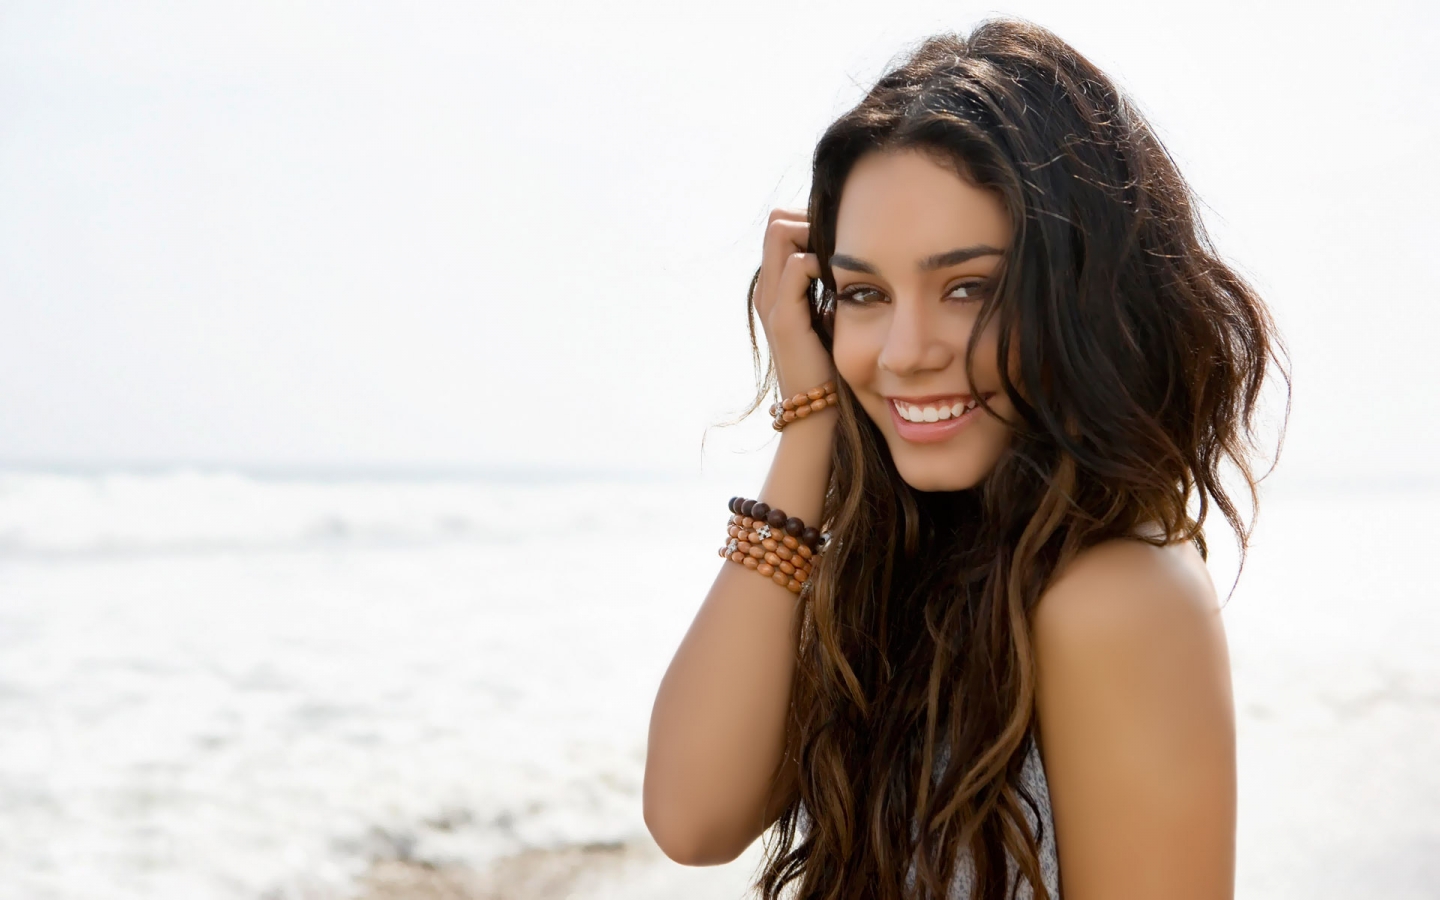 Vanessa Hudgens Smile for 1440 x 900 widescreen resolution